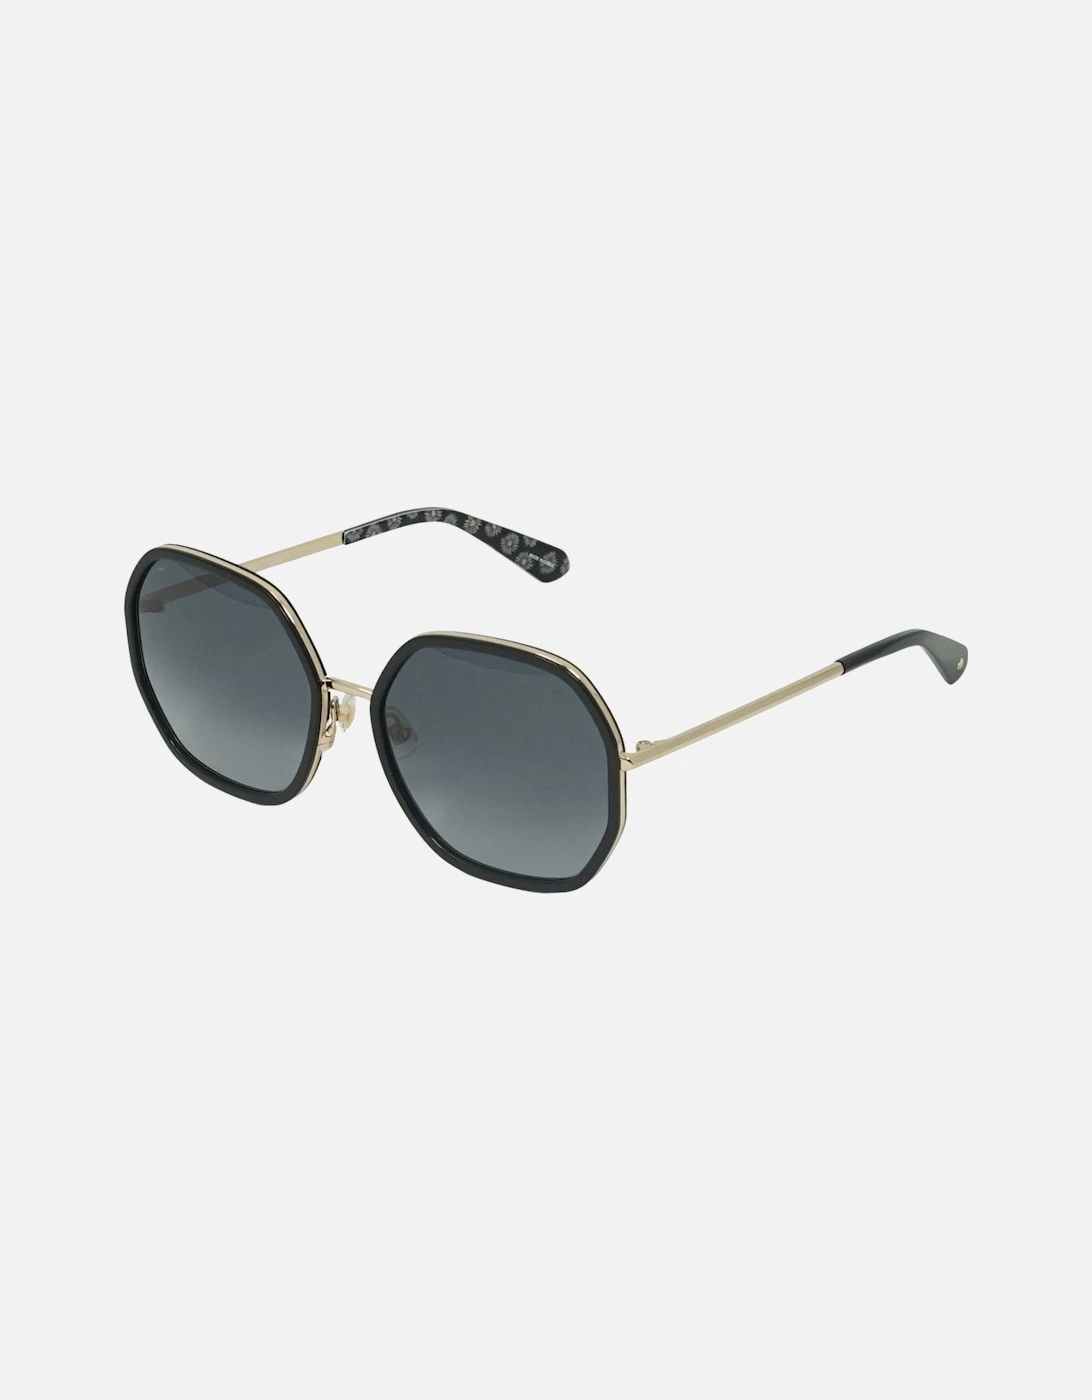 NICOLA/G/S RHL Black Gold Sunglasses